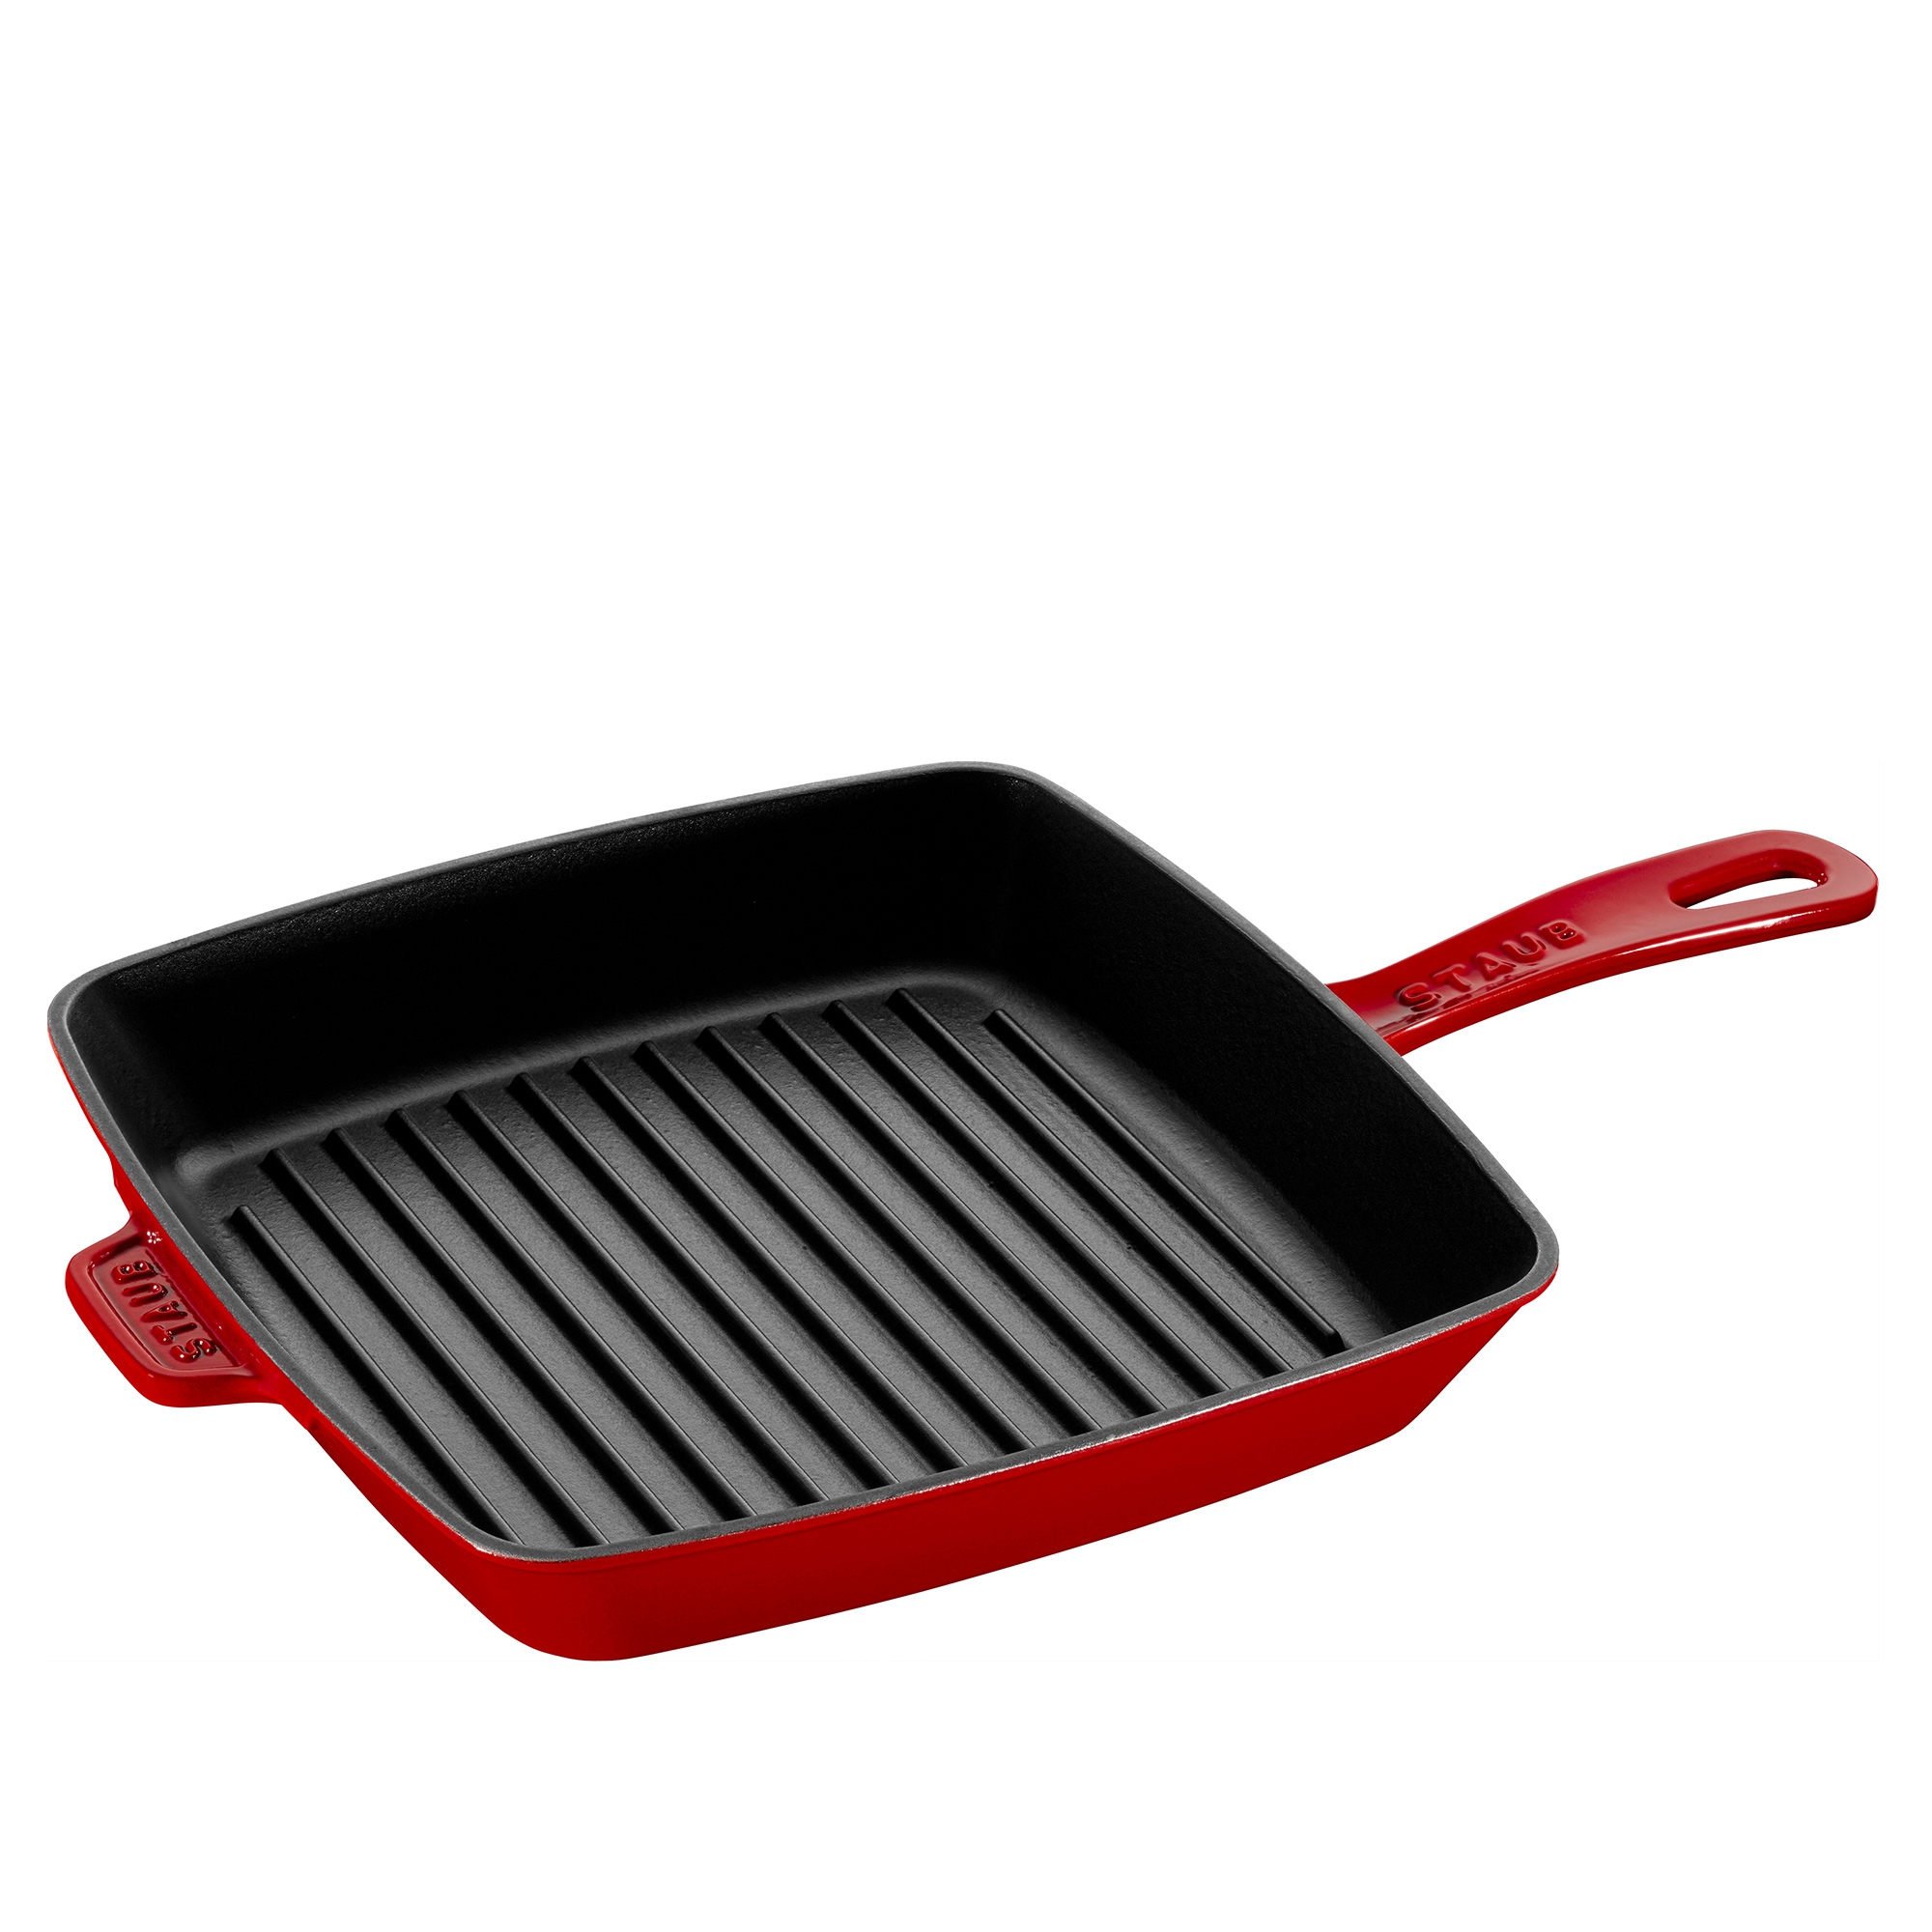 Staub - grill pan - square - 26 cm